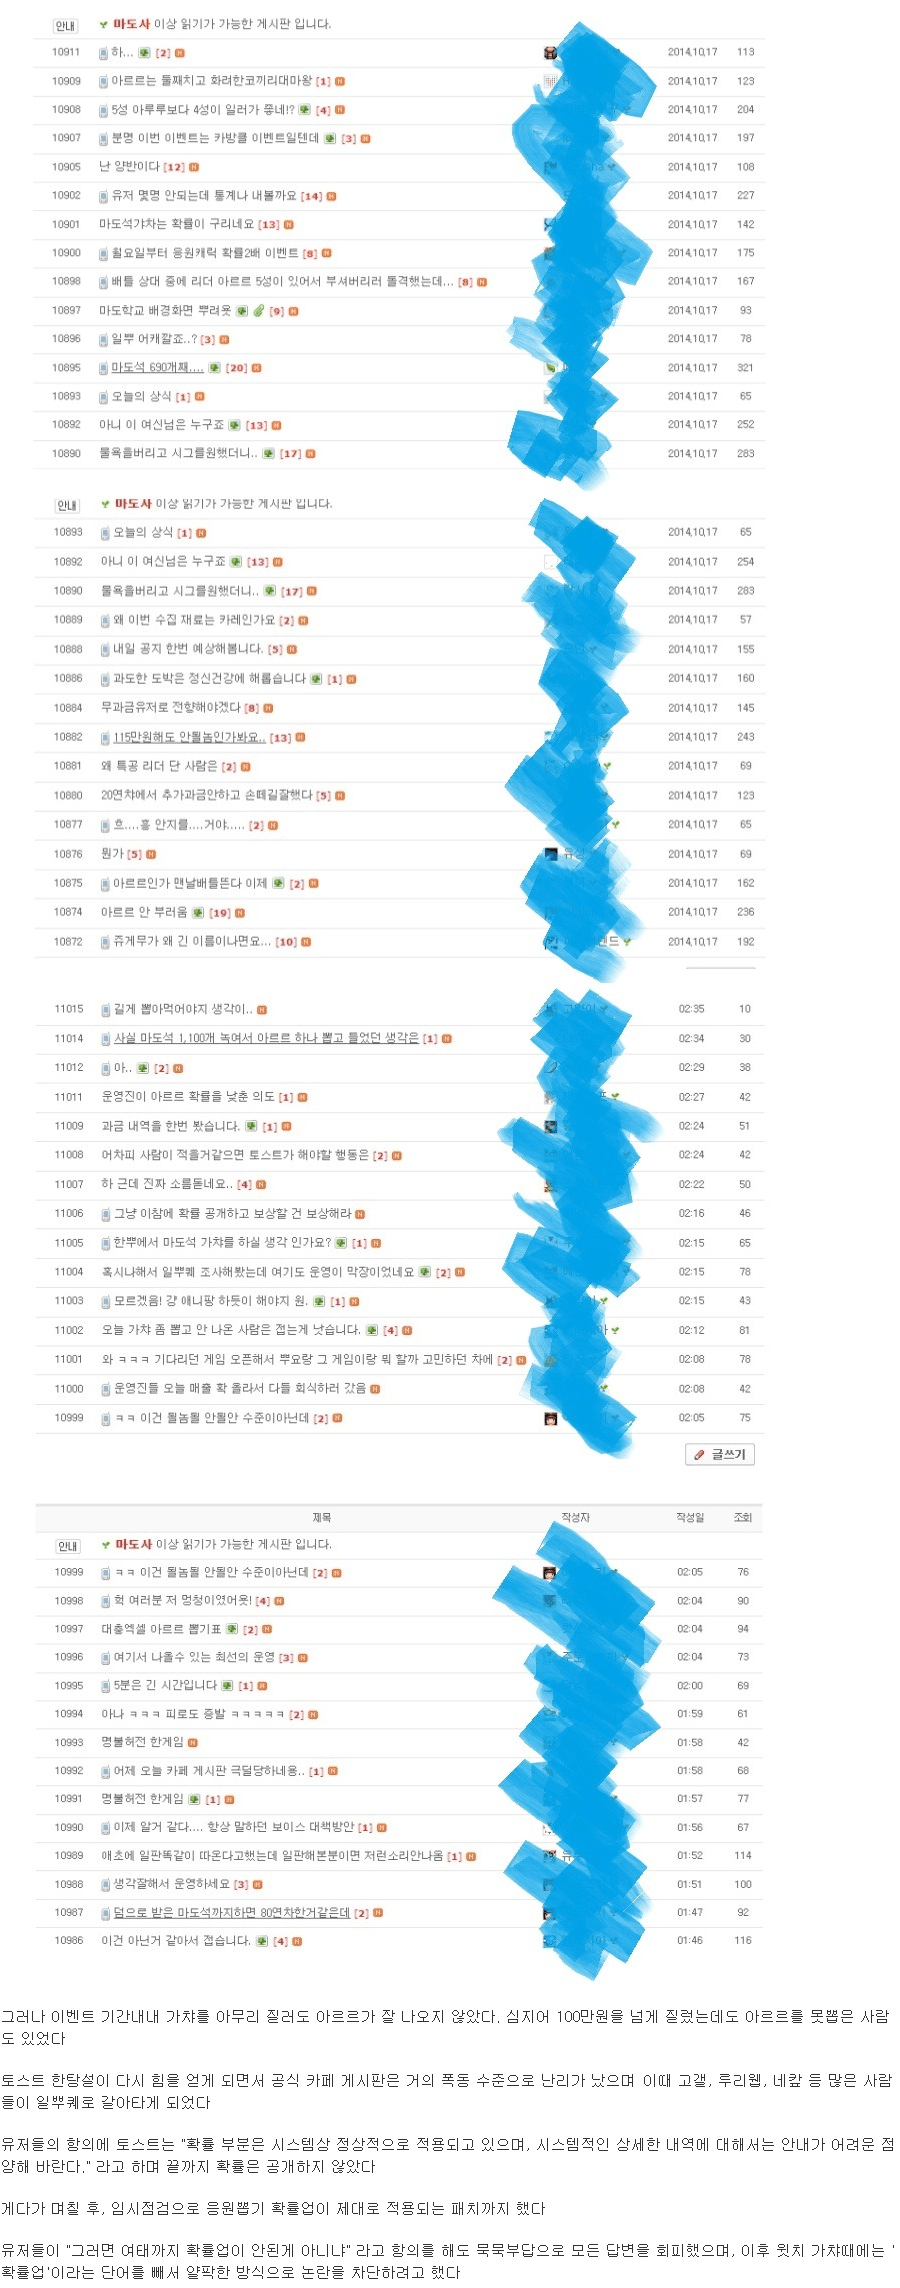 Screenshot_2021-04-07 토스트 한뿌퀘 먹튀 사건 txt - 초개념 갤러리(3).png